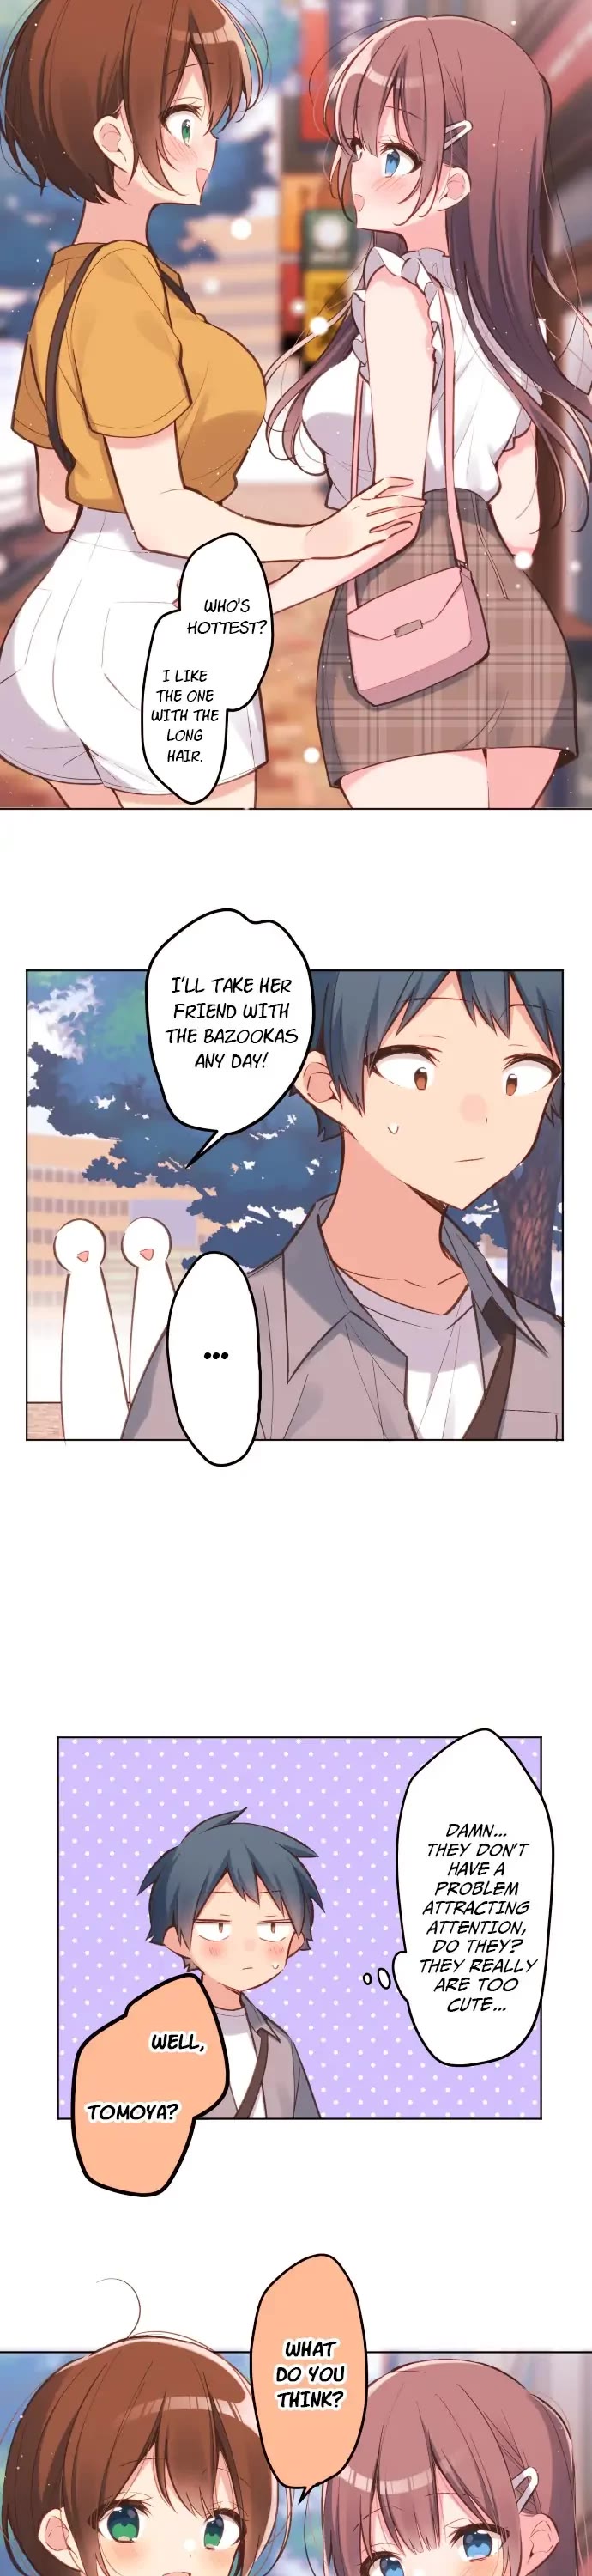 Waka-Chan Is Flirty Again - Page 2